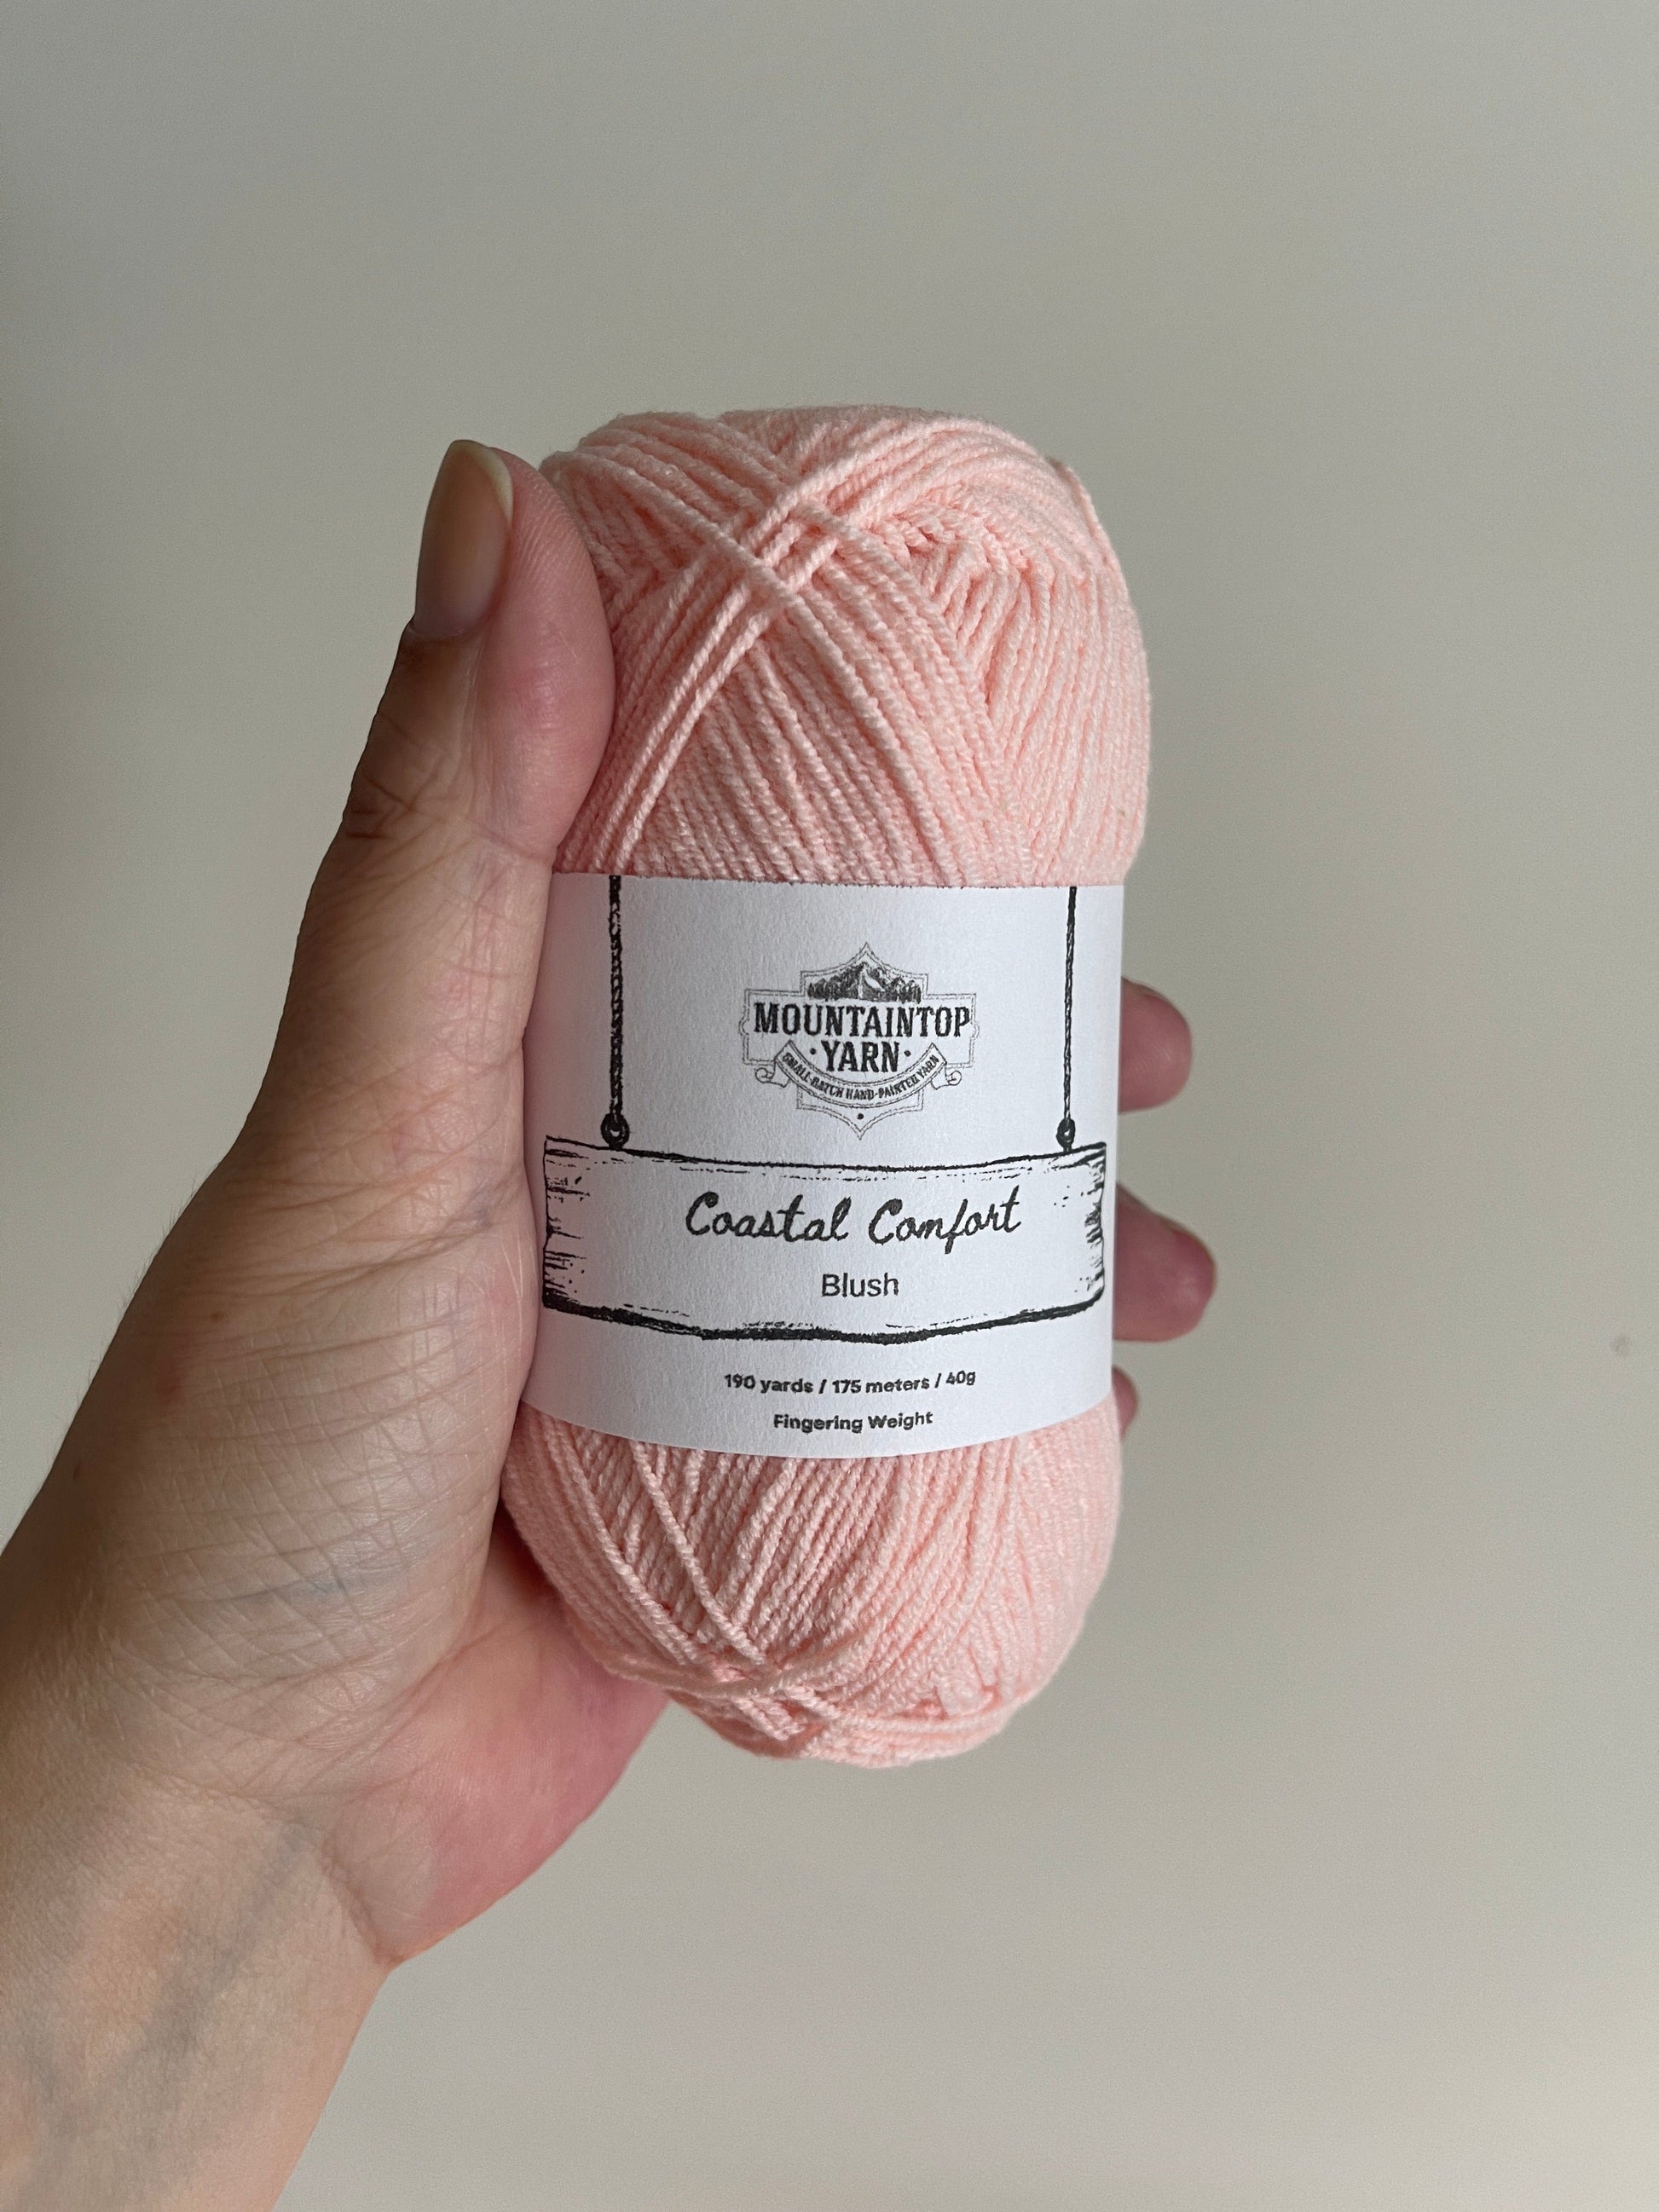 Mountaintop Yarn Blush Coastal Comfort - Cotton and Acrylic Blend Yarn Yarn